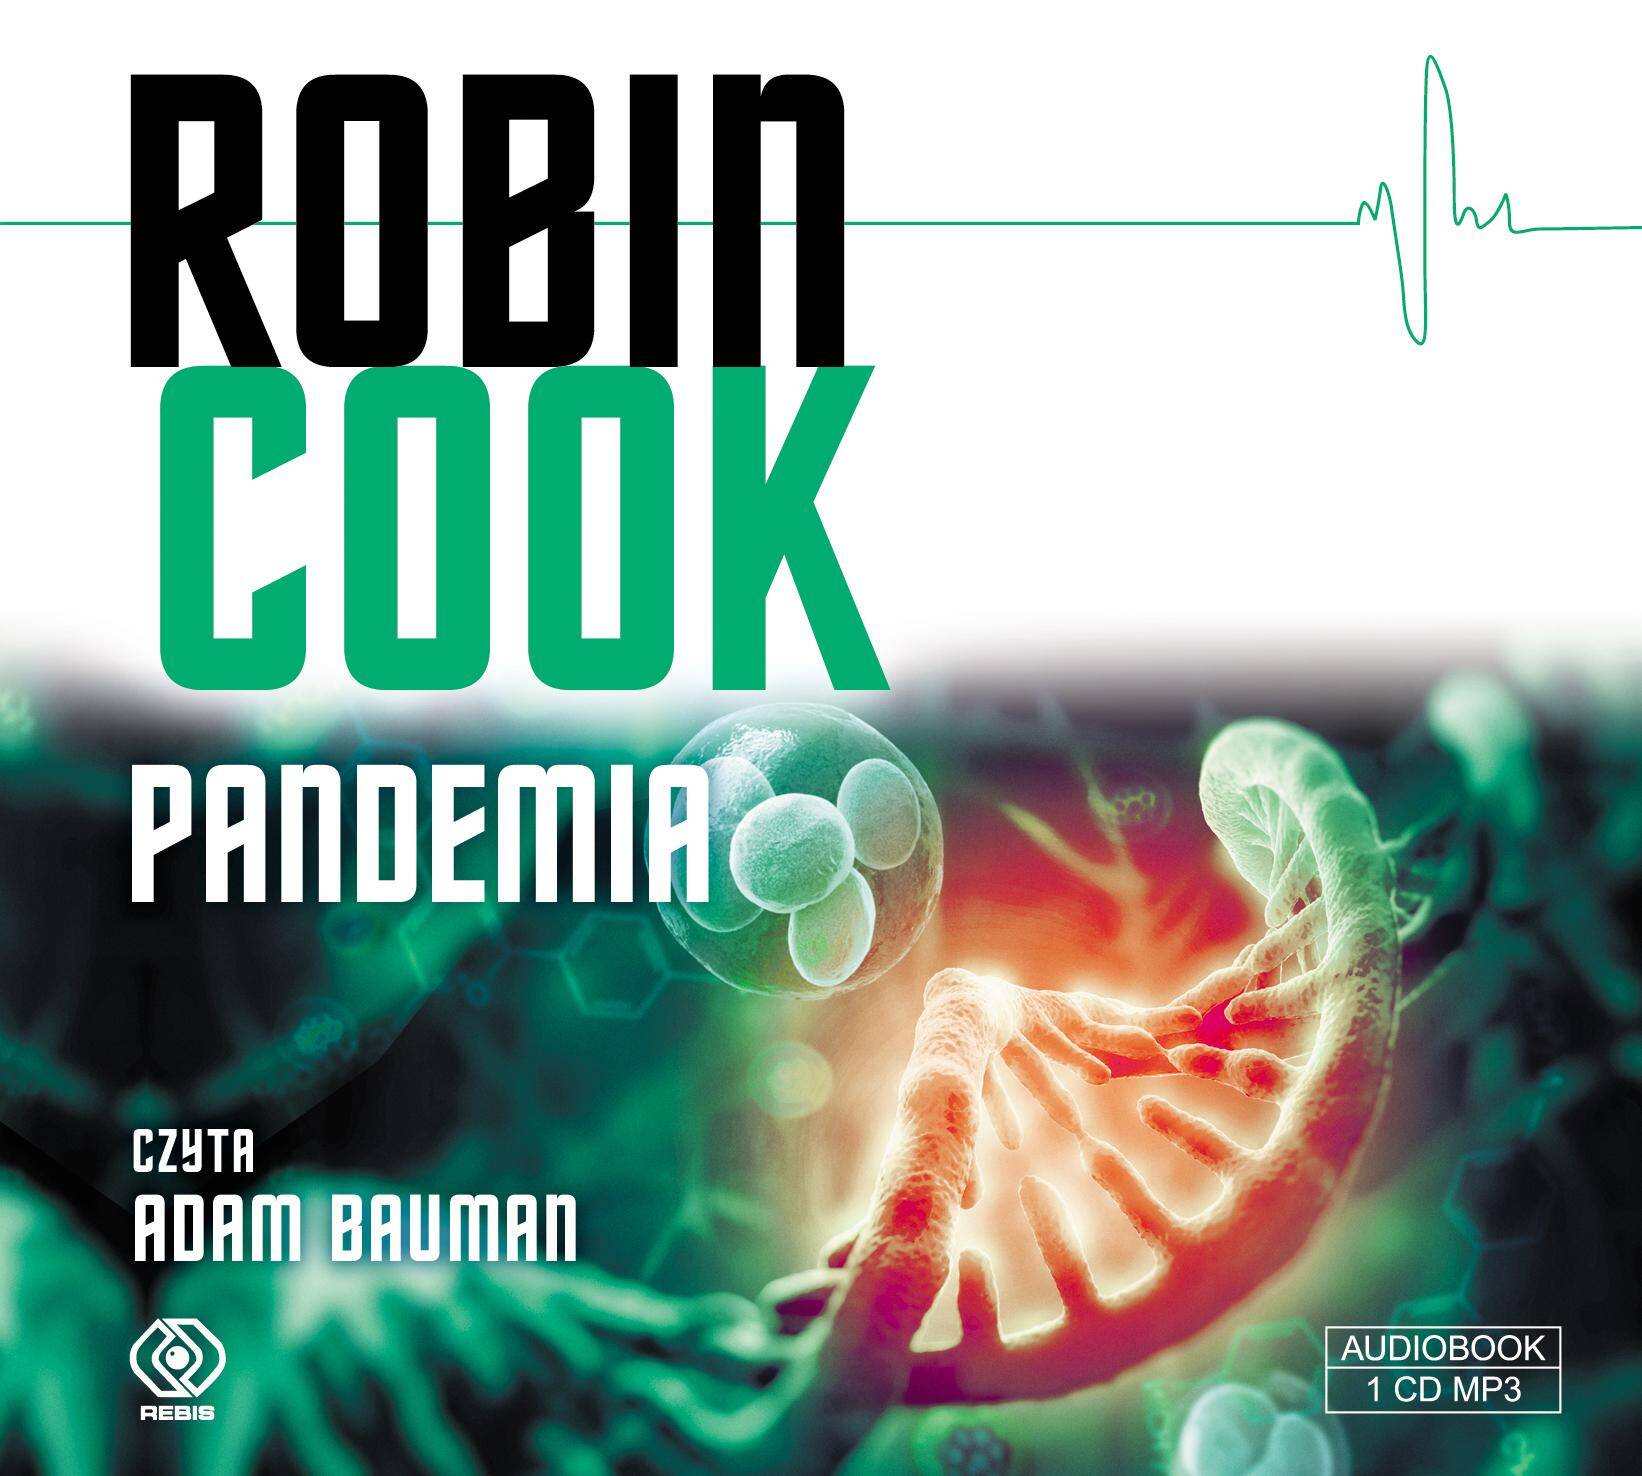 CD MP3 Pandemia